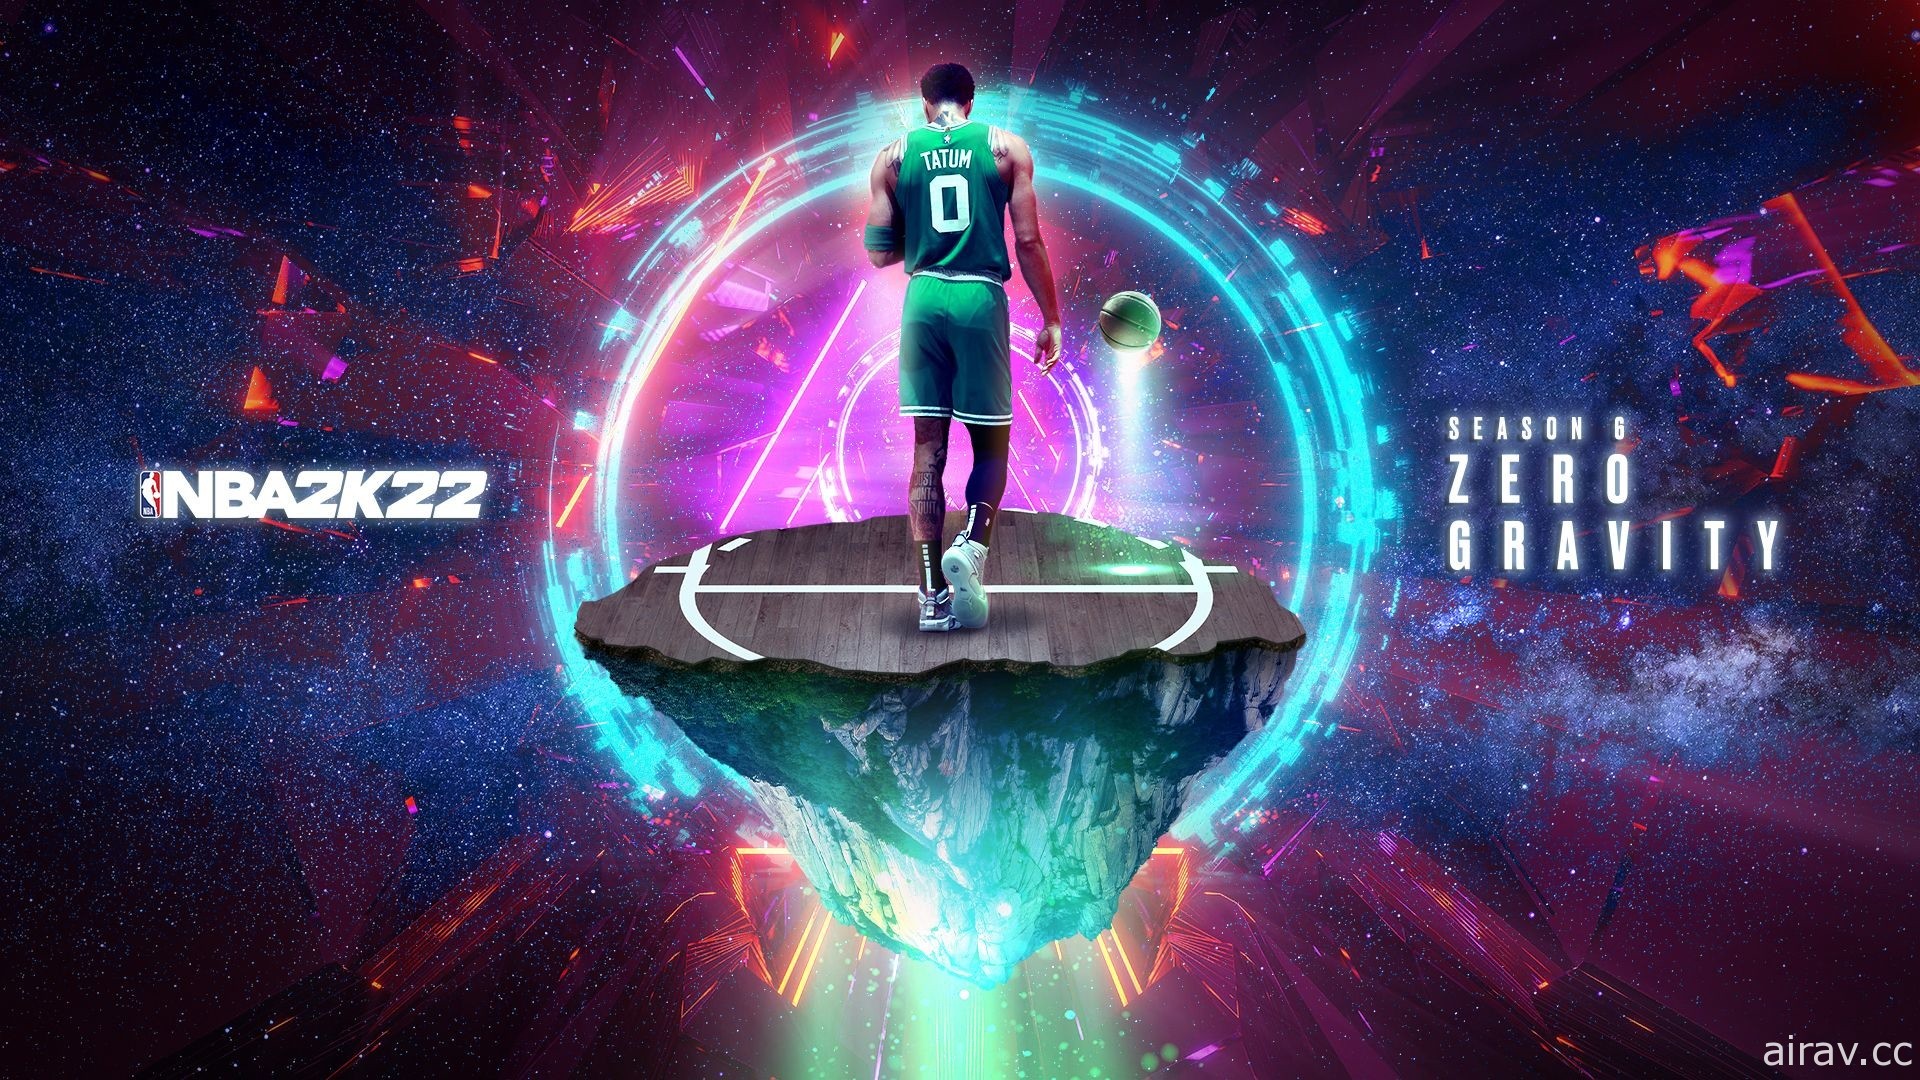 《NBA 2K22》第六季「零重力」4 月 8 日登場